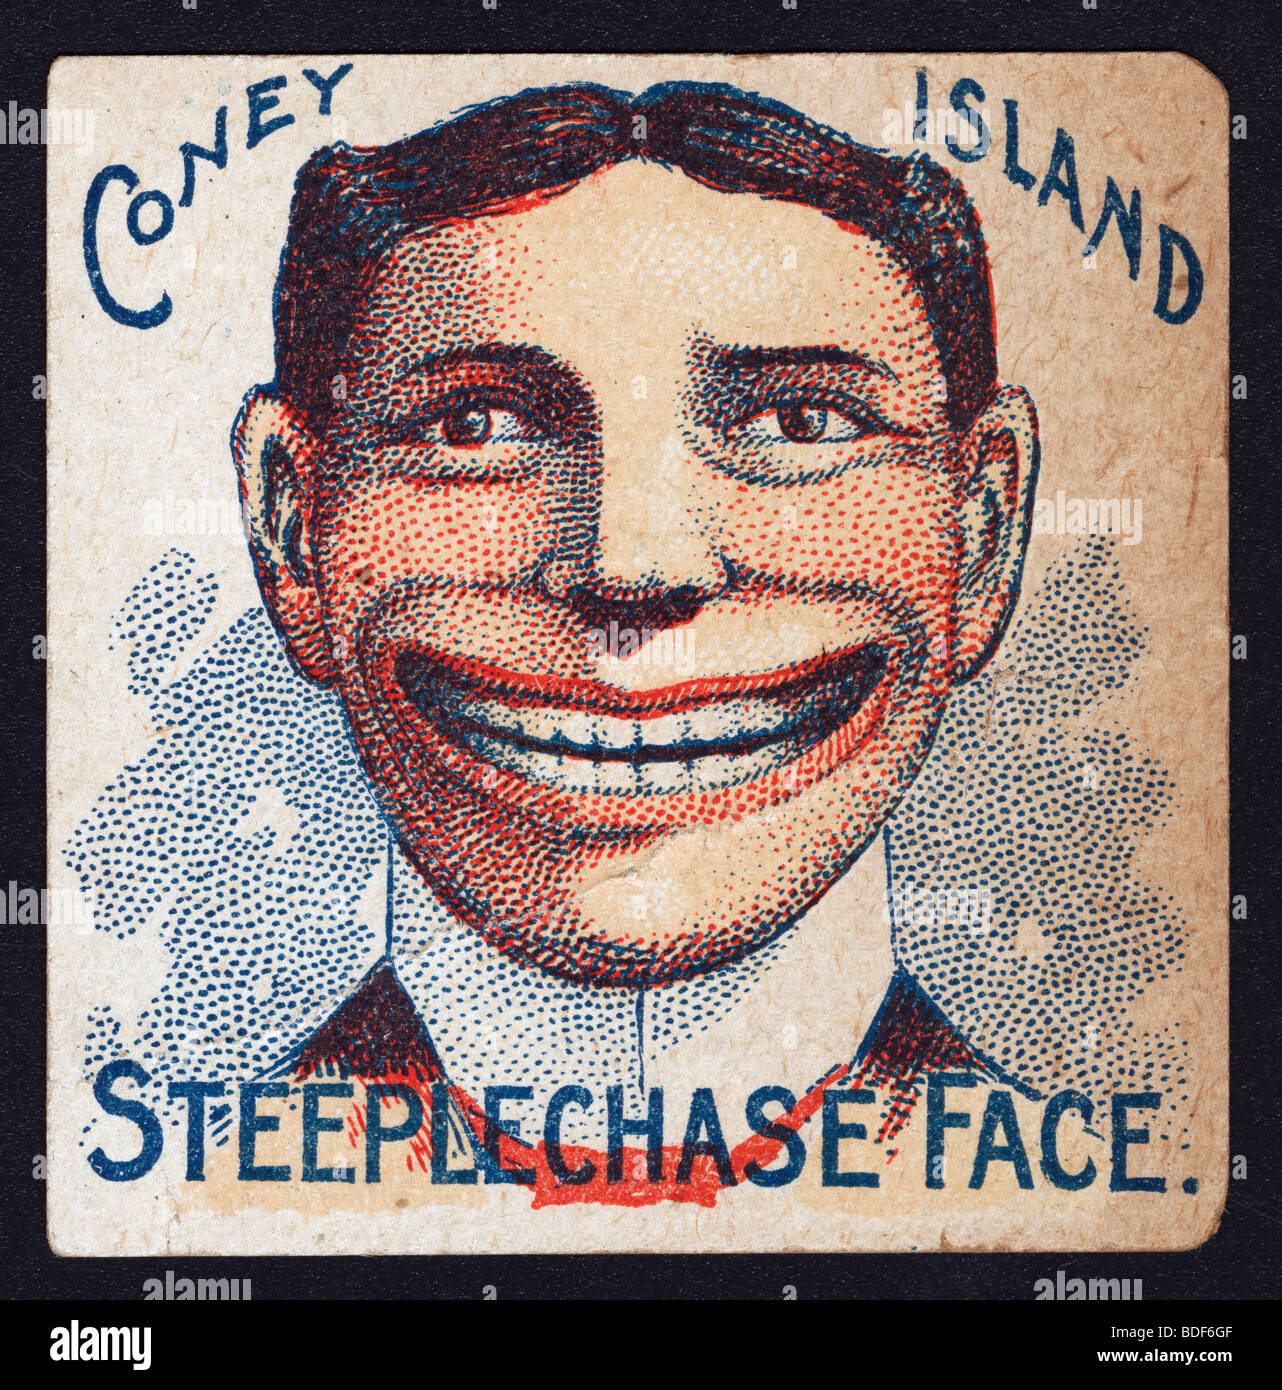 Steeplechase Jack the Coney Island Mascot Stock Photo